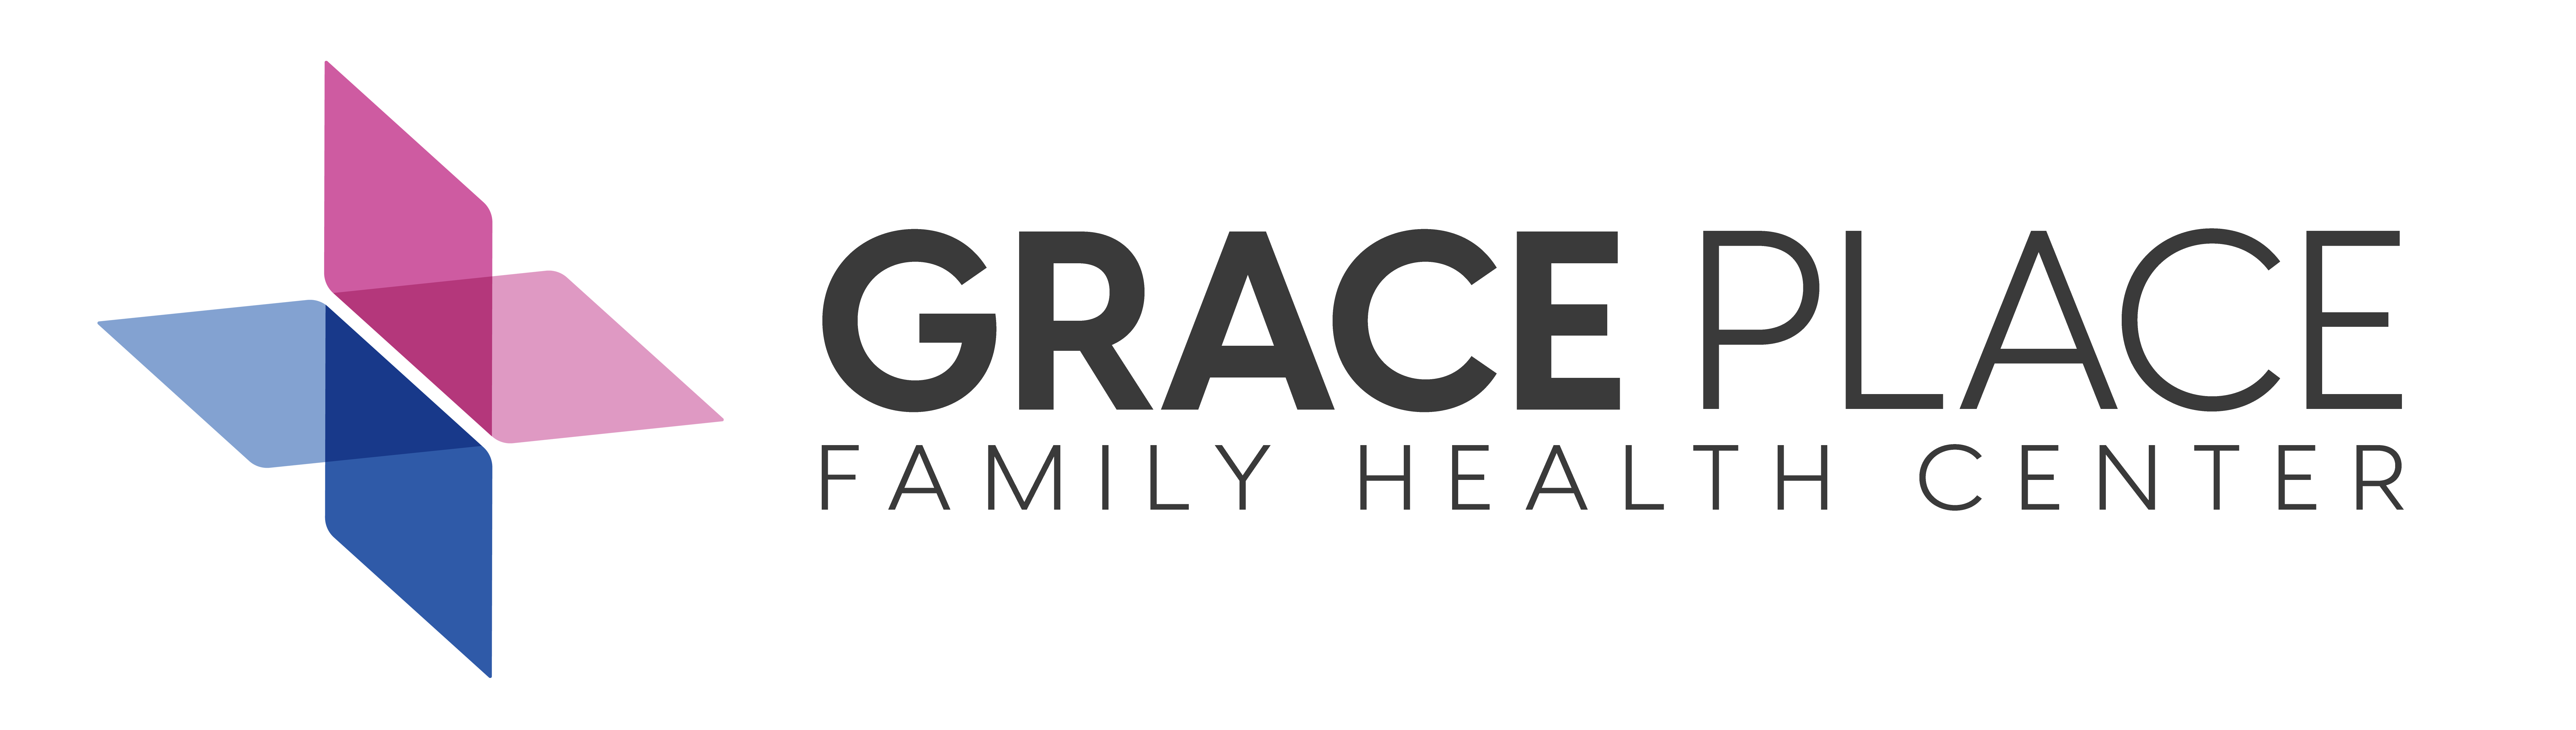 Grace Place Family Health Center